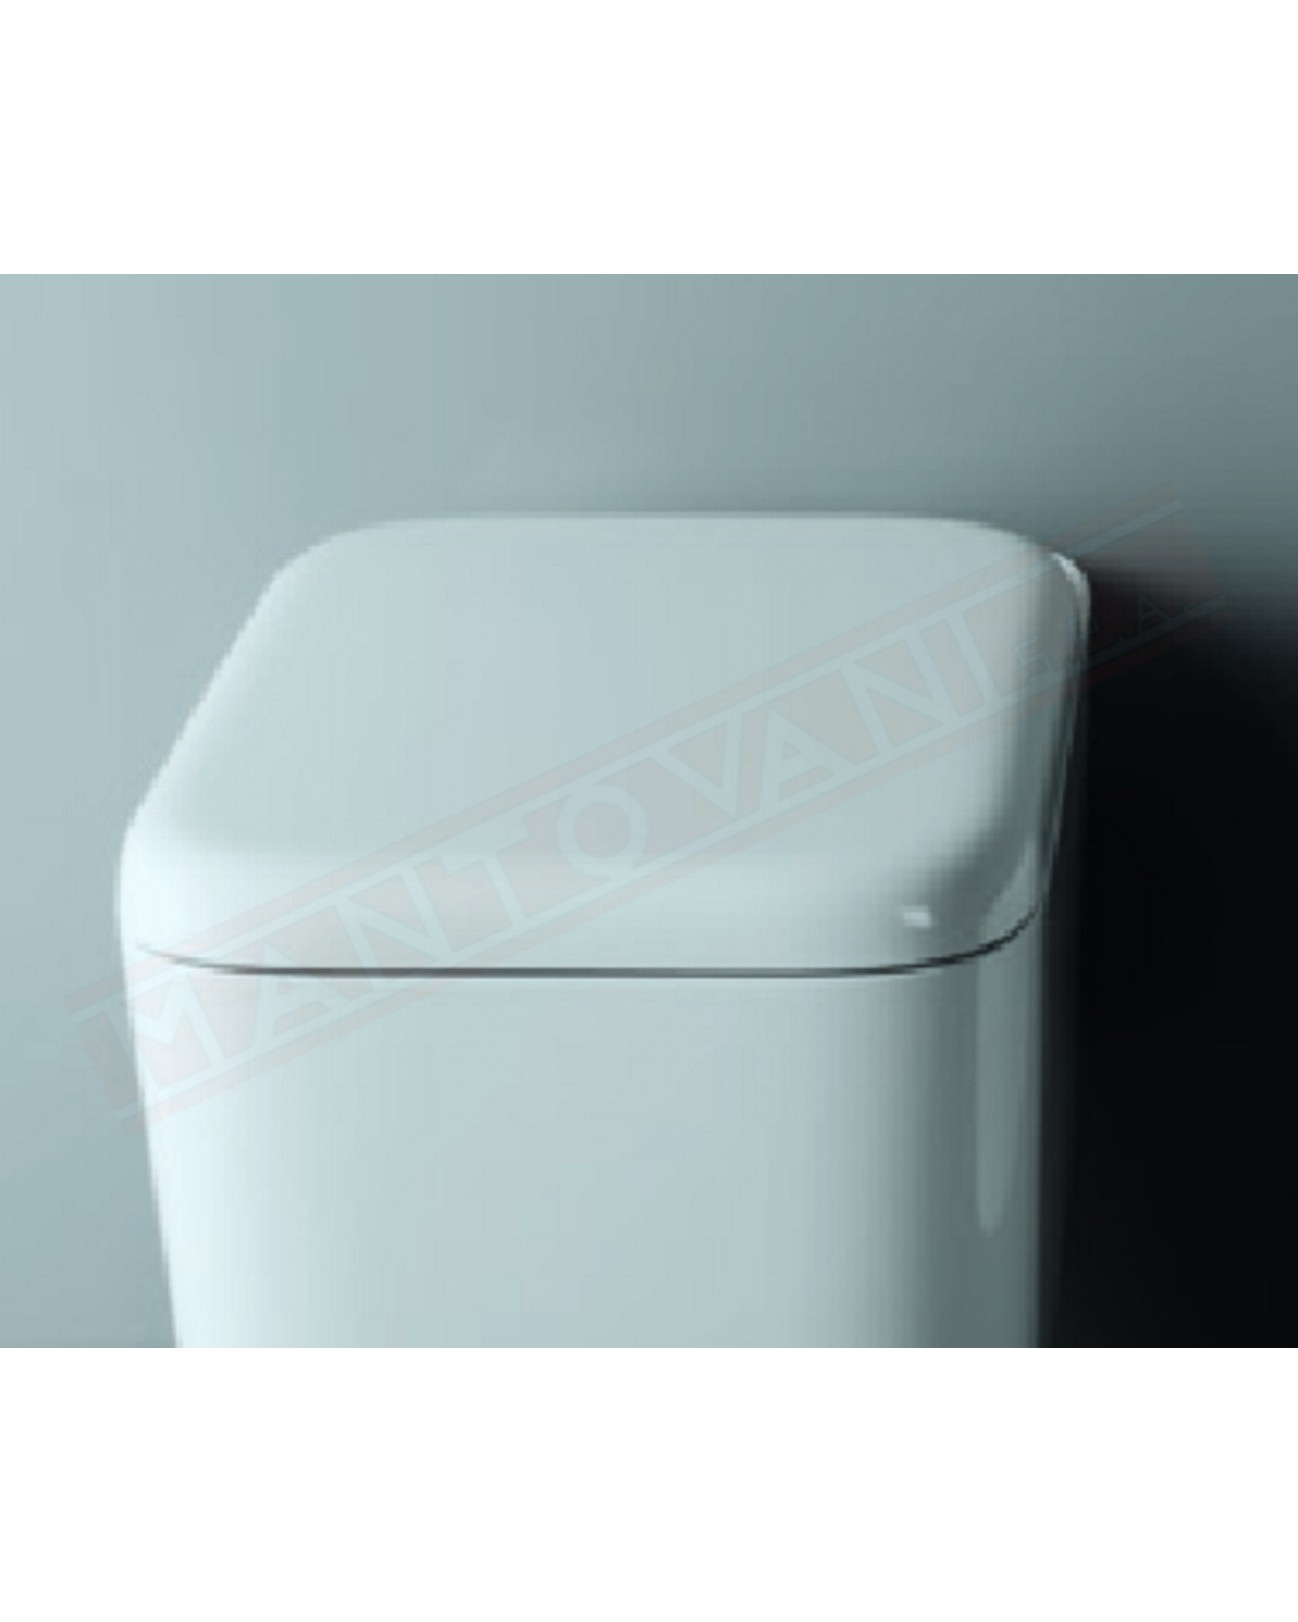 Sedile soft-close Cameo Collection bianco opaco in resina termoindurente per vaso cmw0201a